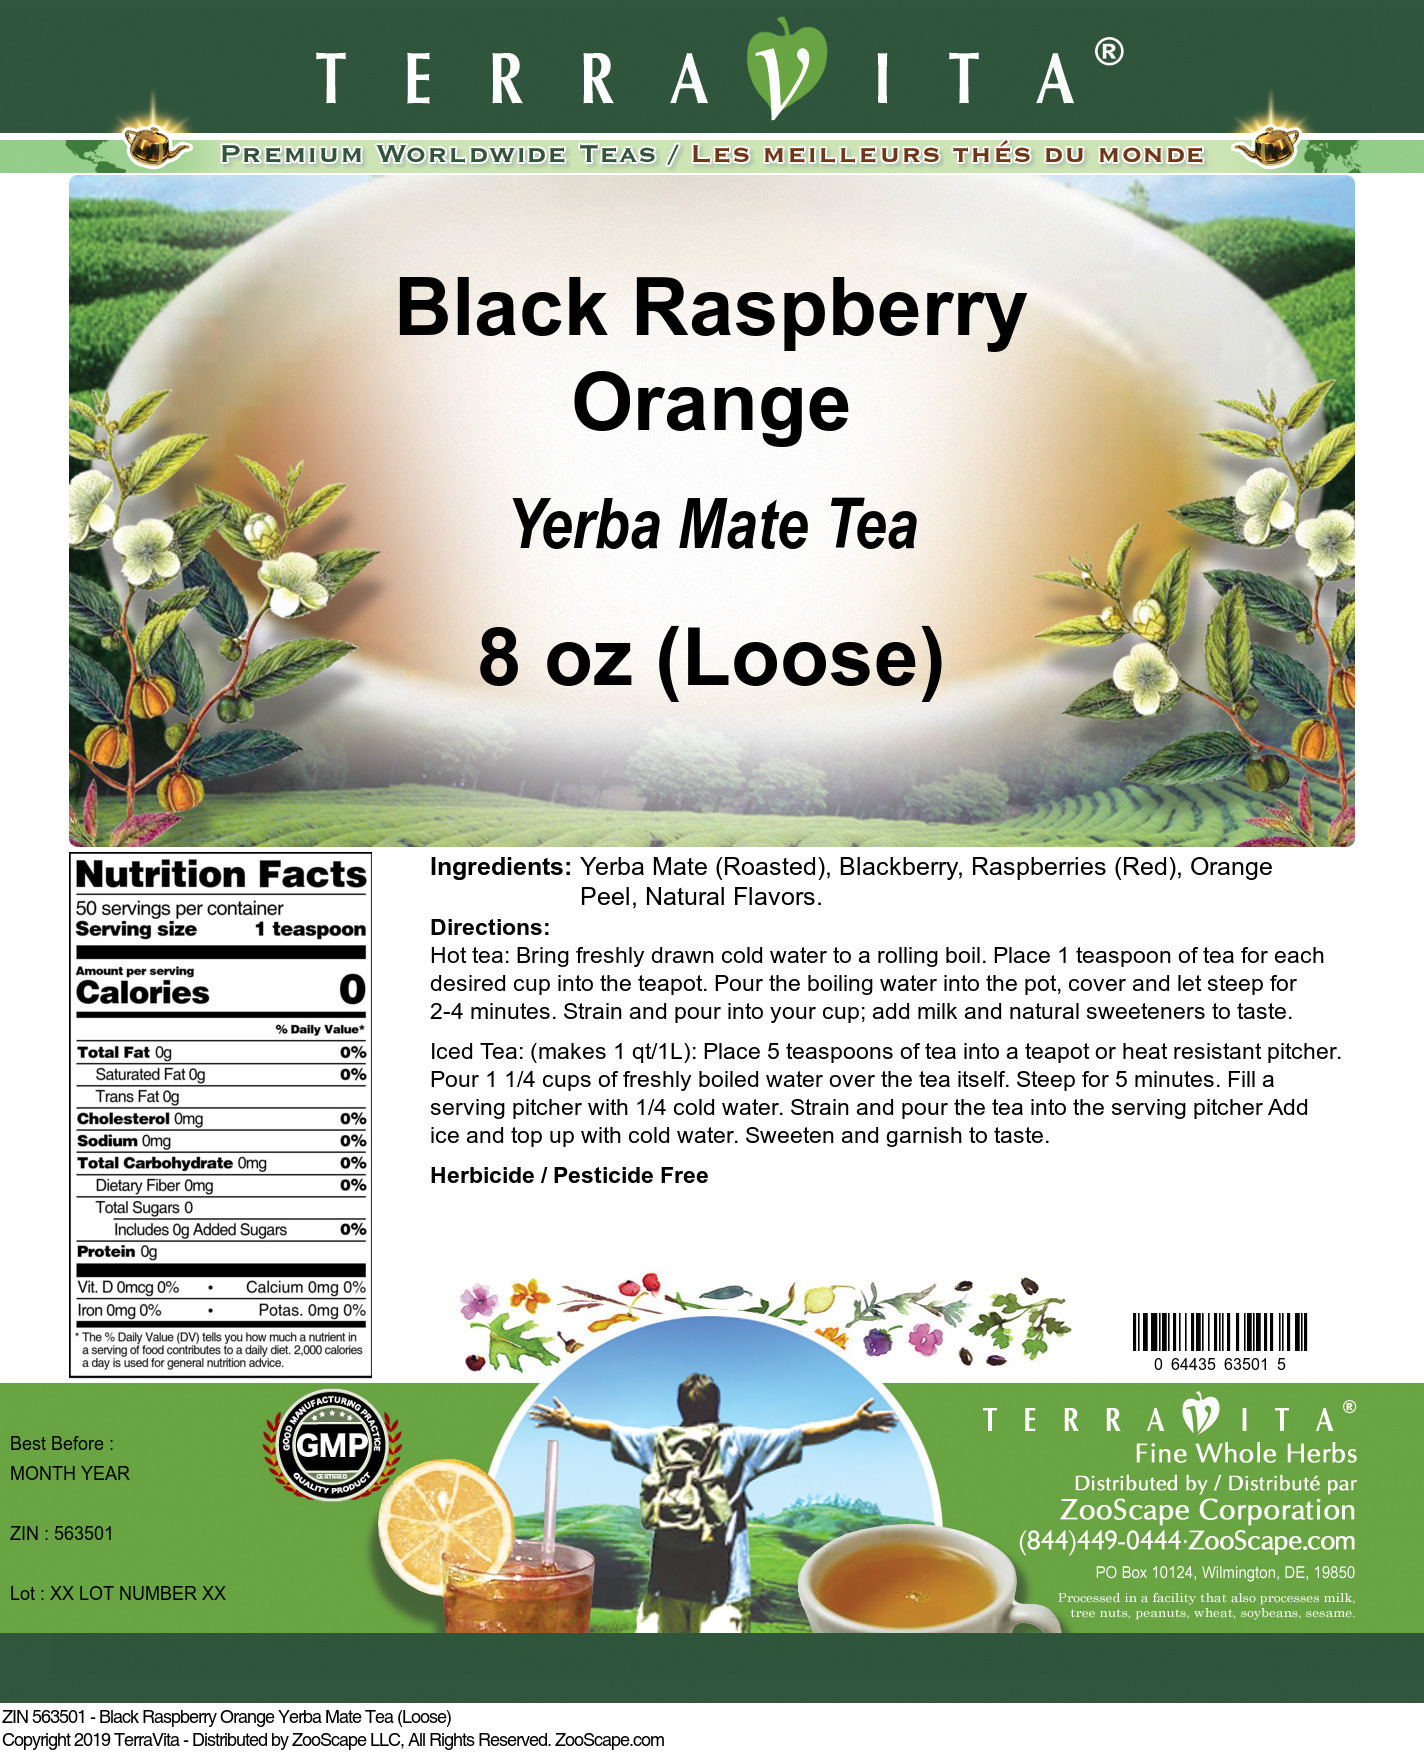 Black Raspberry Orange Yerba Mate Tea (Loose) - Label